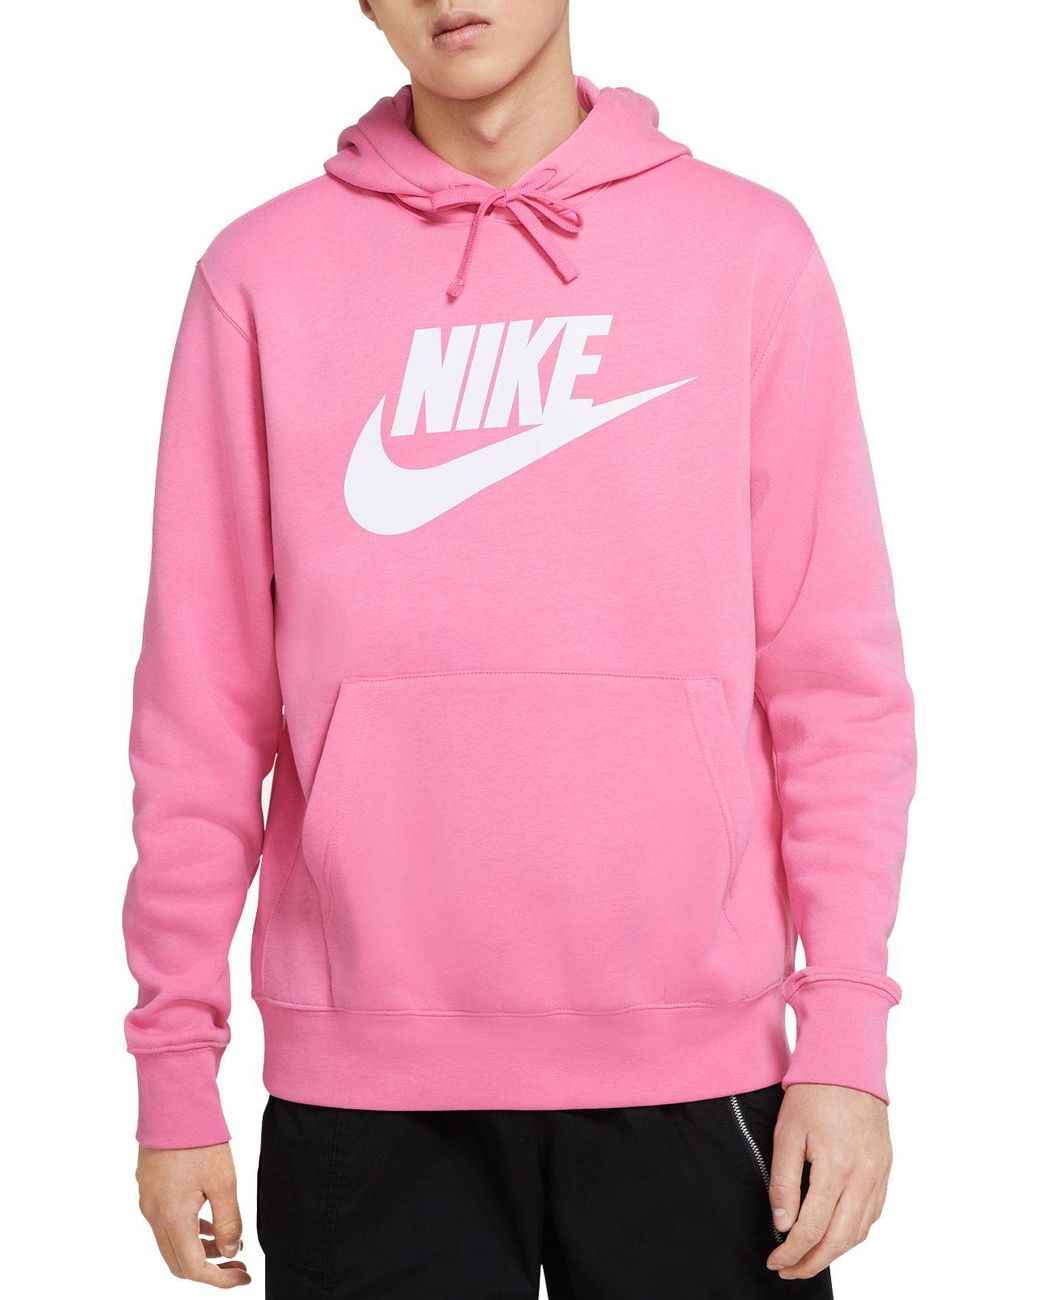 Nike Futura Club Fleece Hoodie in Pink for Men - Lyst